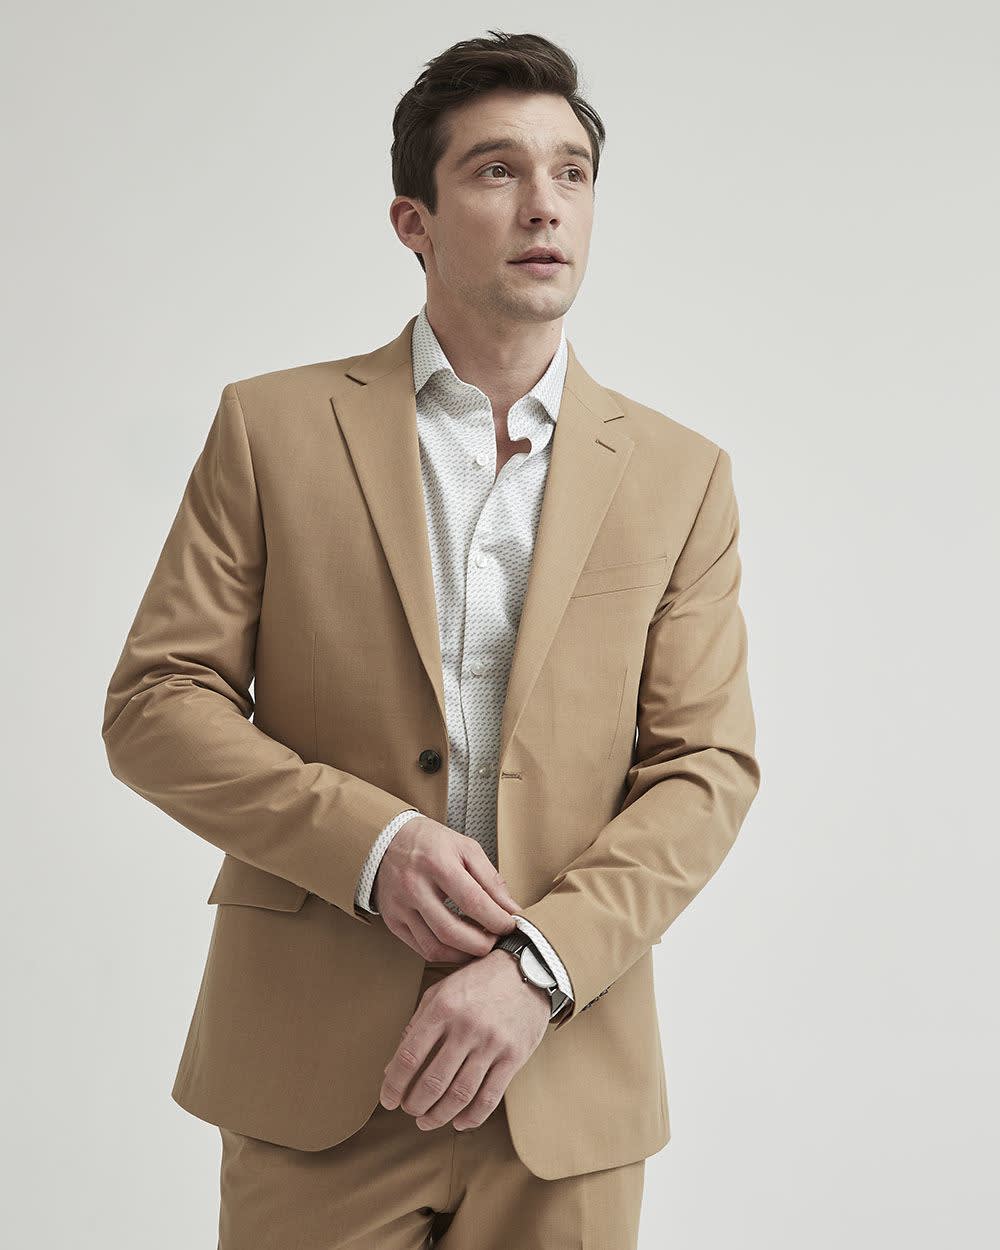 Men's Loose Cotton and Linen Suit Jacket,Summer Casual Lightweight Solid  Linen Shirt,Regular Fit Blazer Jacket for Men. (XXL, Khaki)